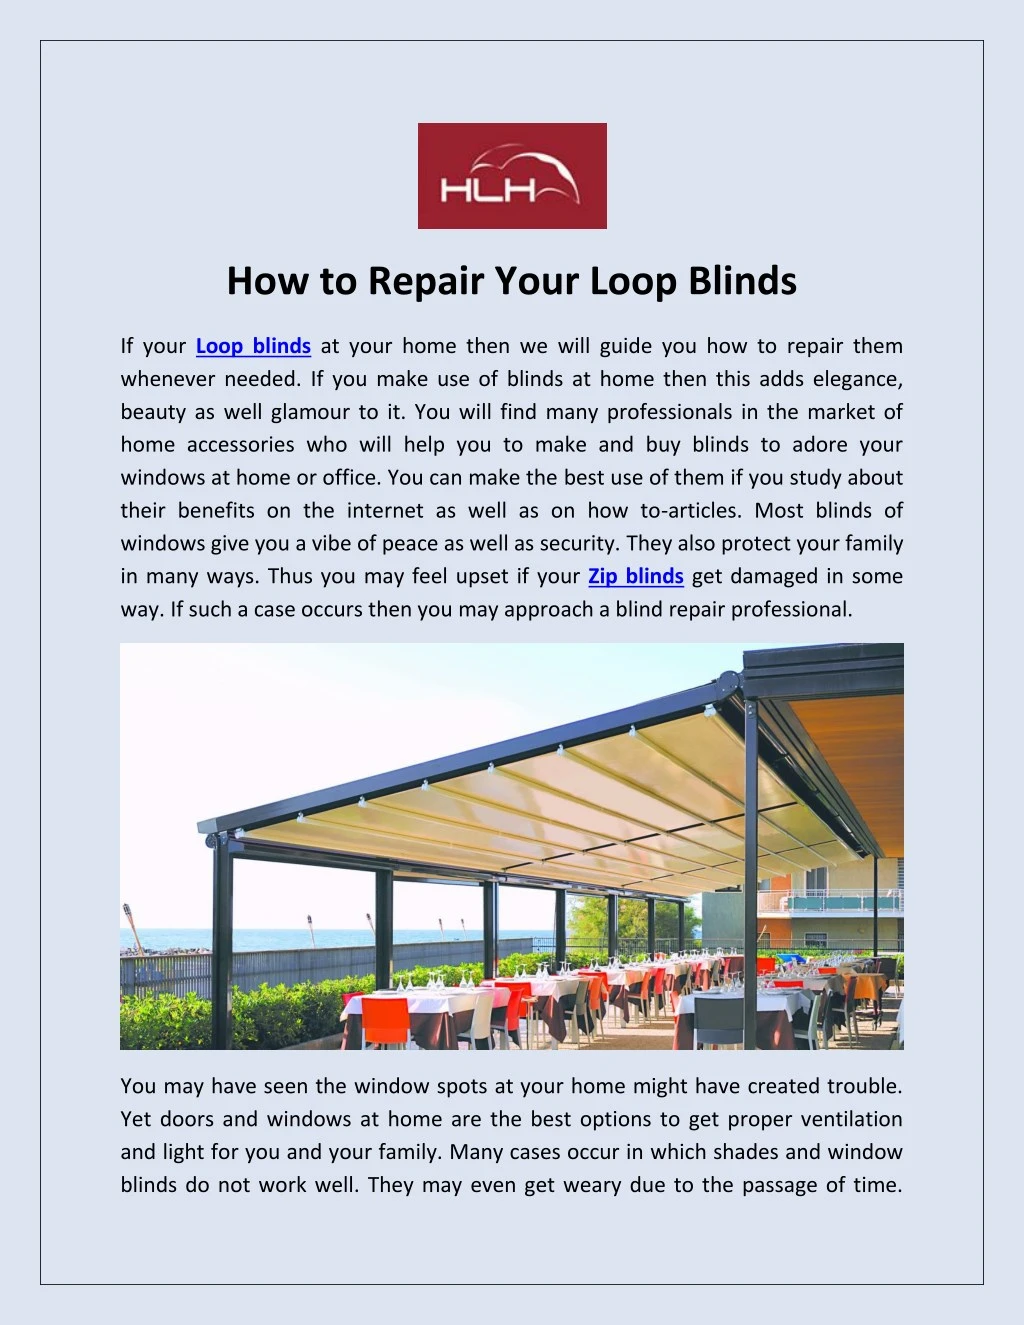 how to repair your loop blinds